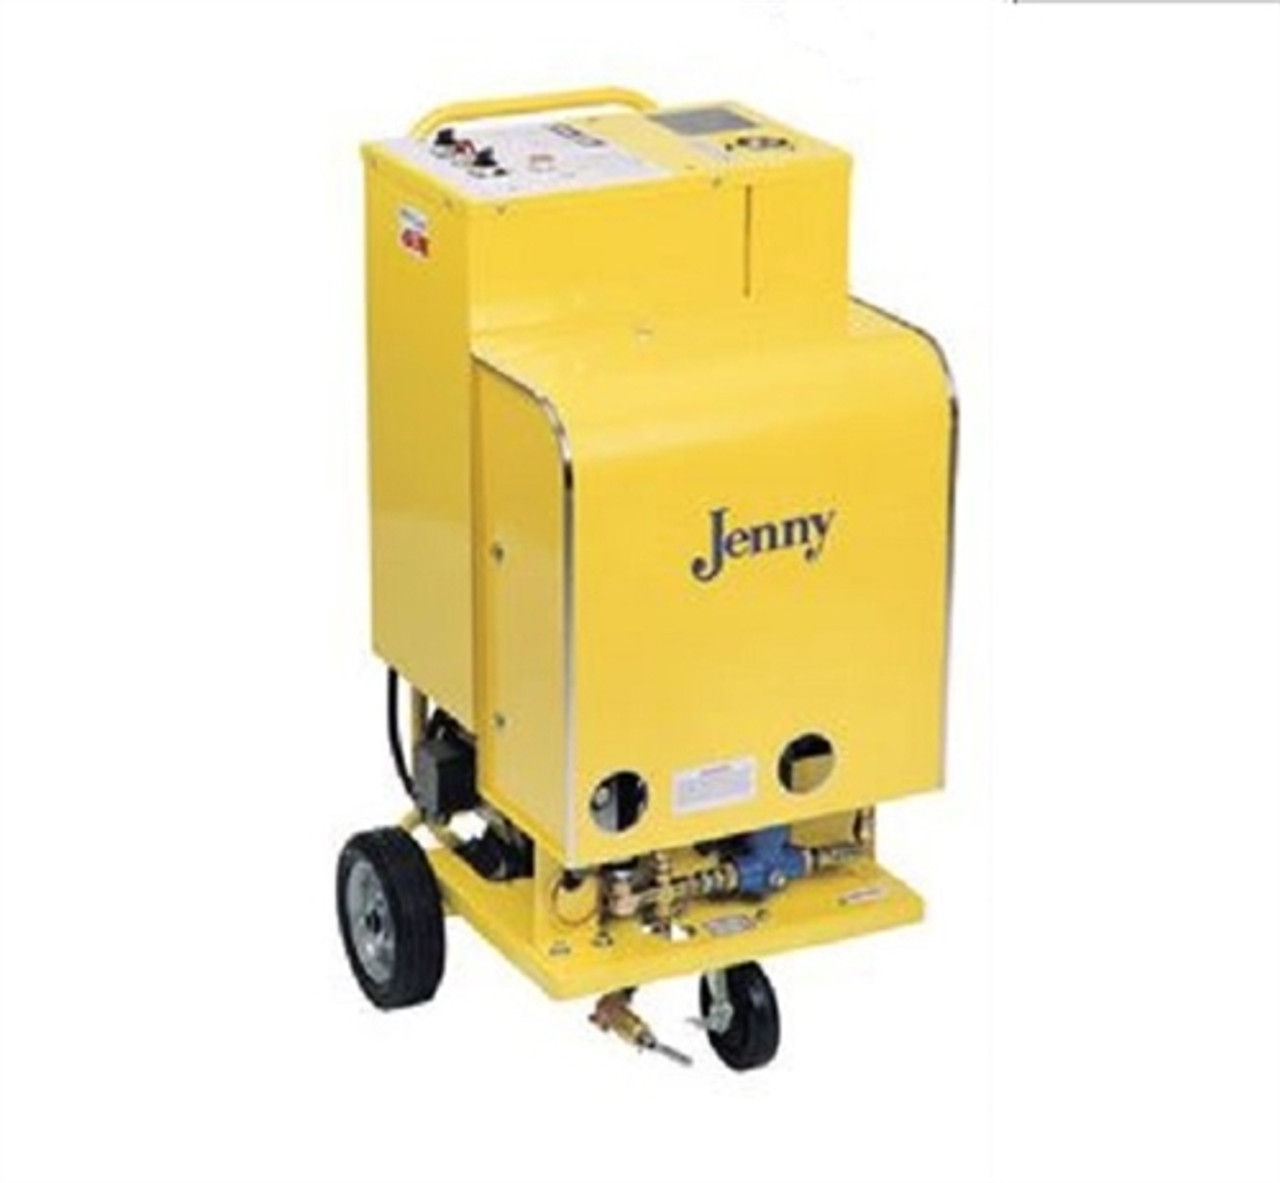 Steam Jenny Pressure Washer and Steam Cleaner Model E-300-C460V, 60htz, 3 Phase - 1.5hp